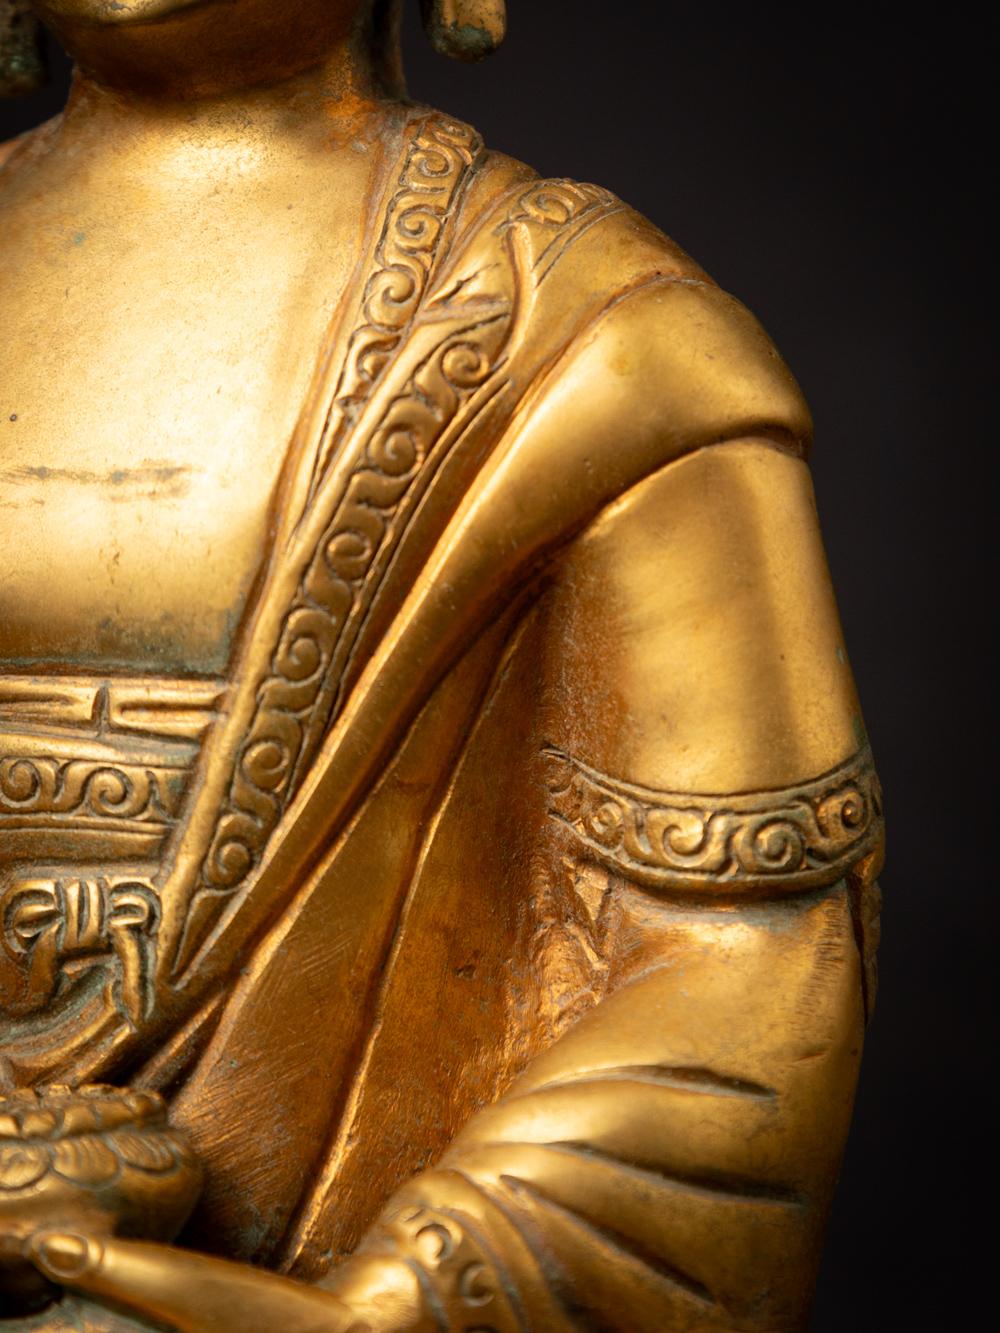 Middle 20th century Old bronze Nepali Buddha statue - OriginalBuddhas 7